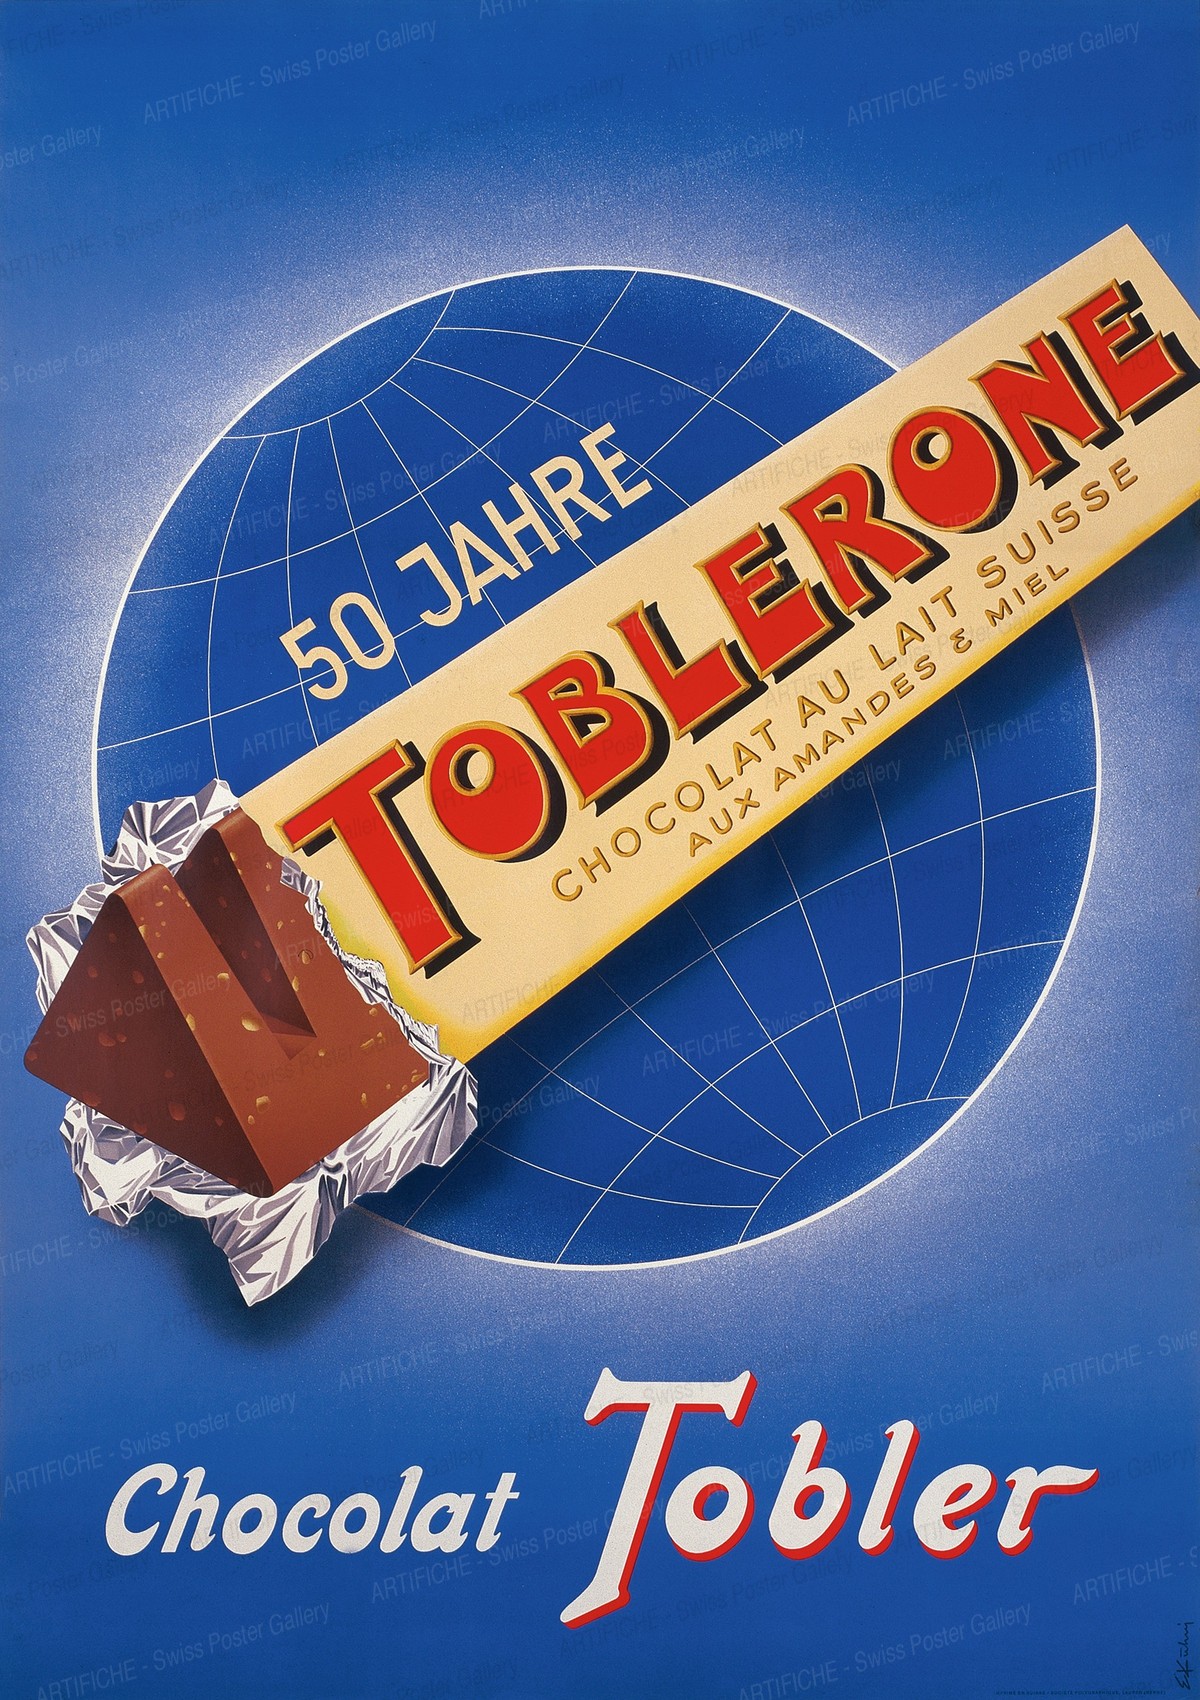 50 Jahre TOBLERONE – Chocolat Tobler, E. Kühni